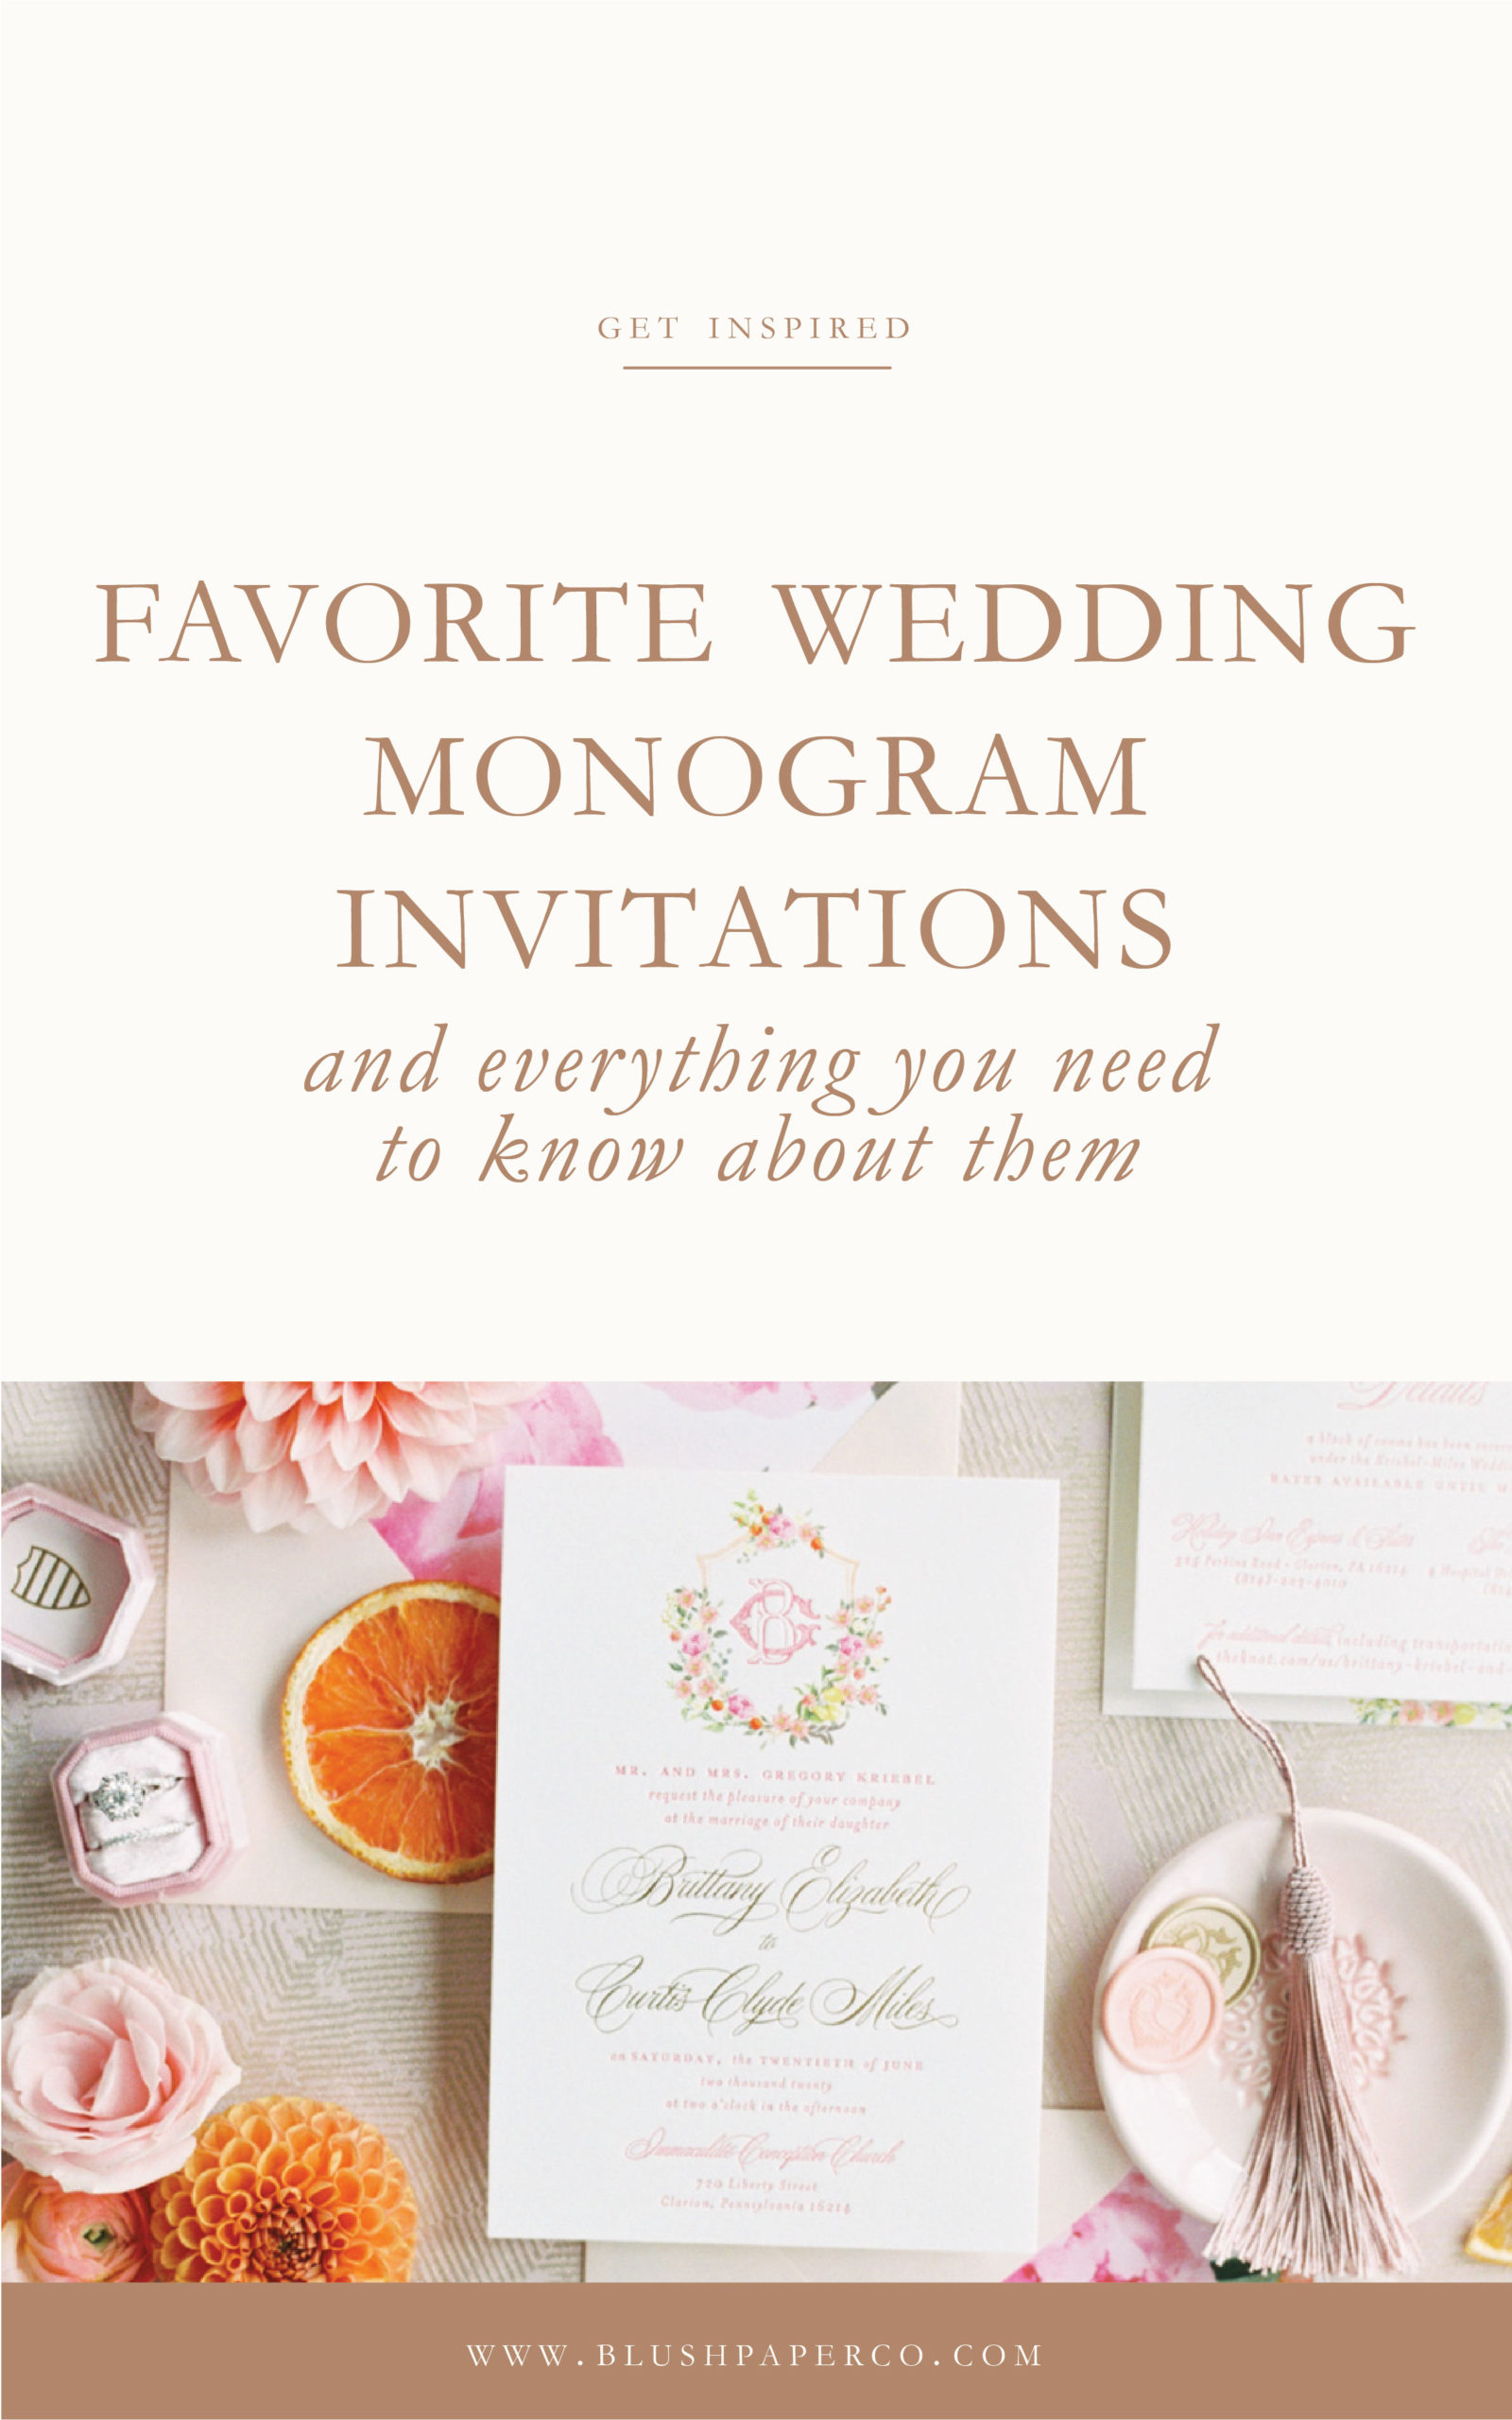 wedding monograms by blush paper co.